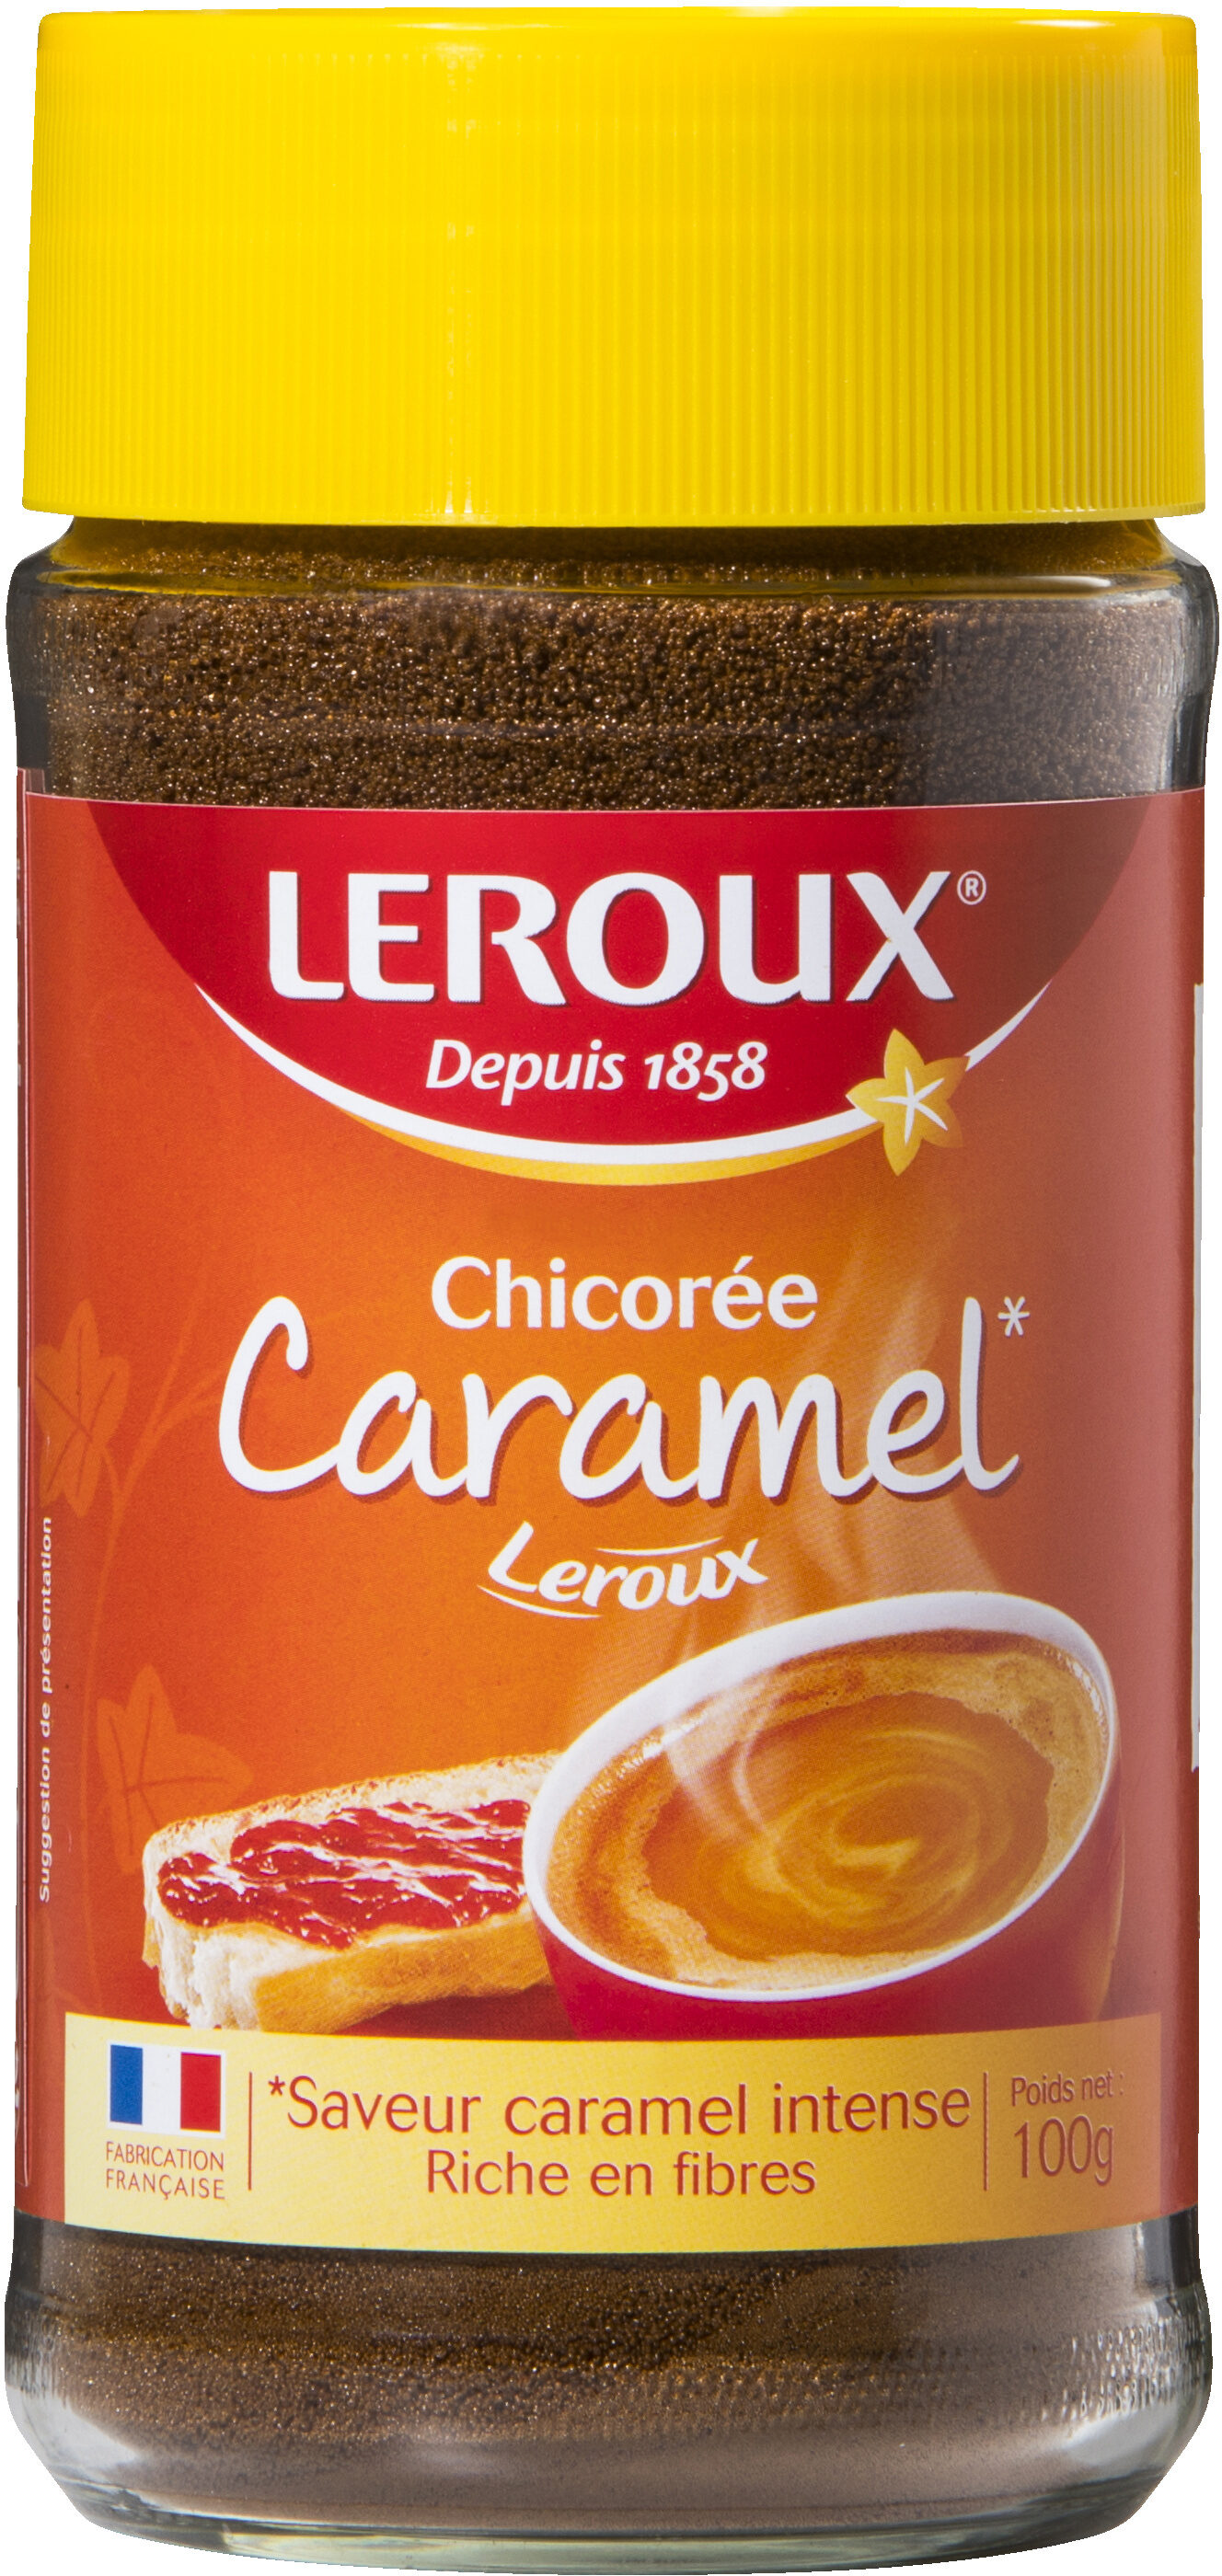 Chicoree soluble caramel 100g - Product - fr